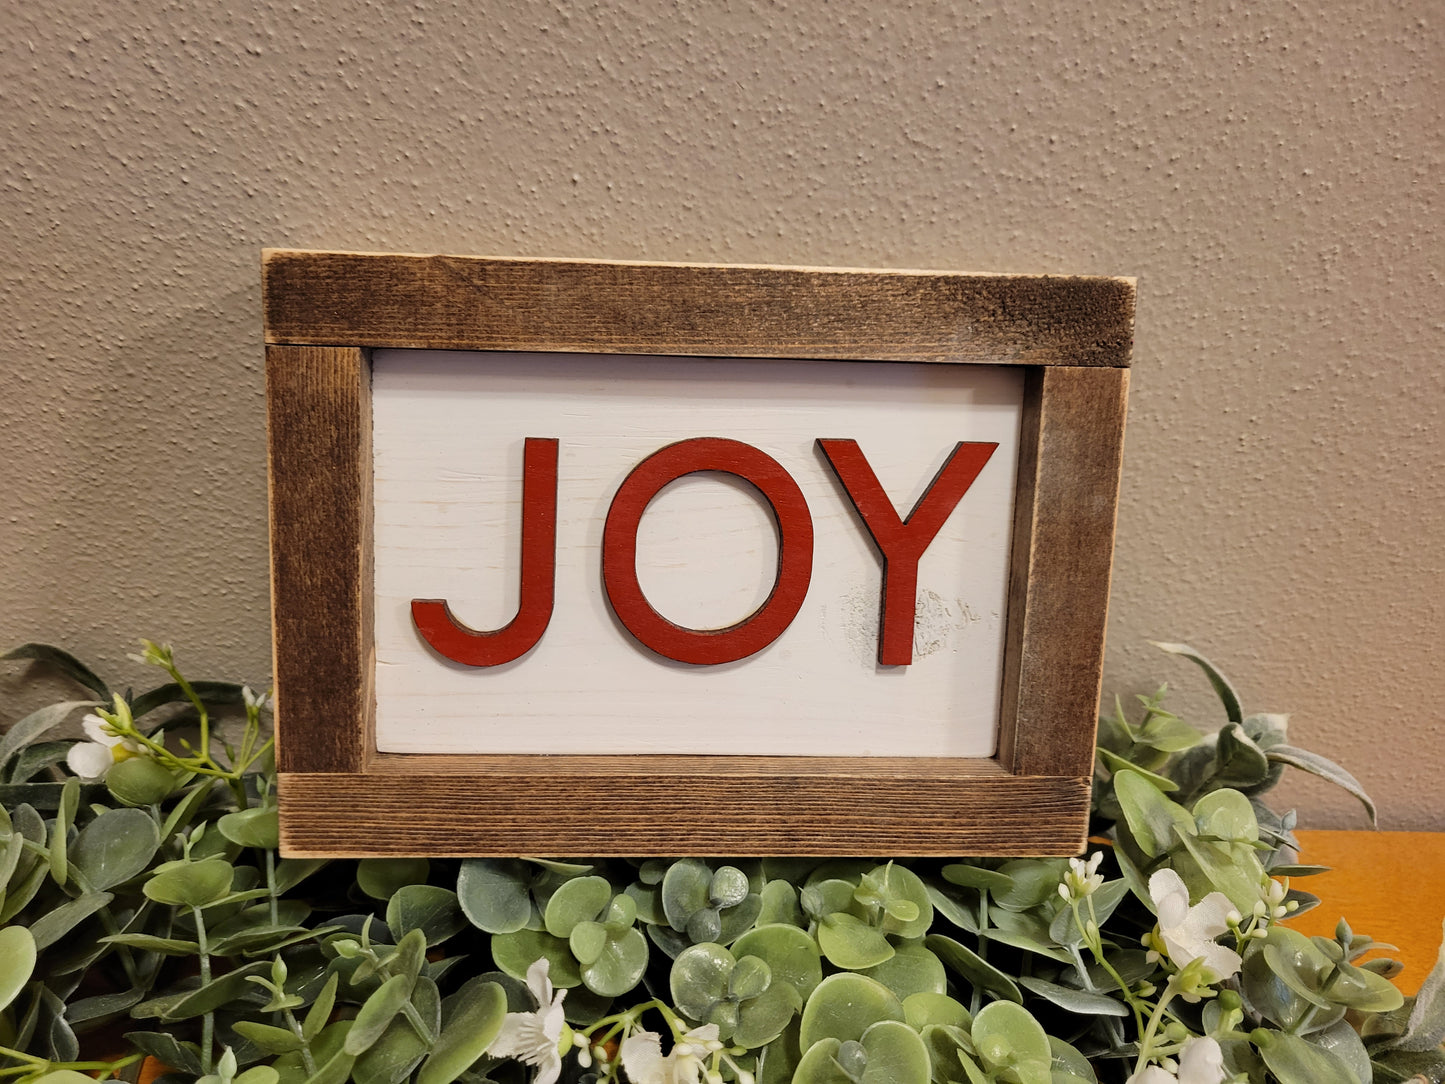 "Joy" Small Shelf Sign